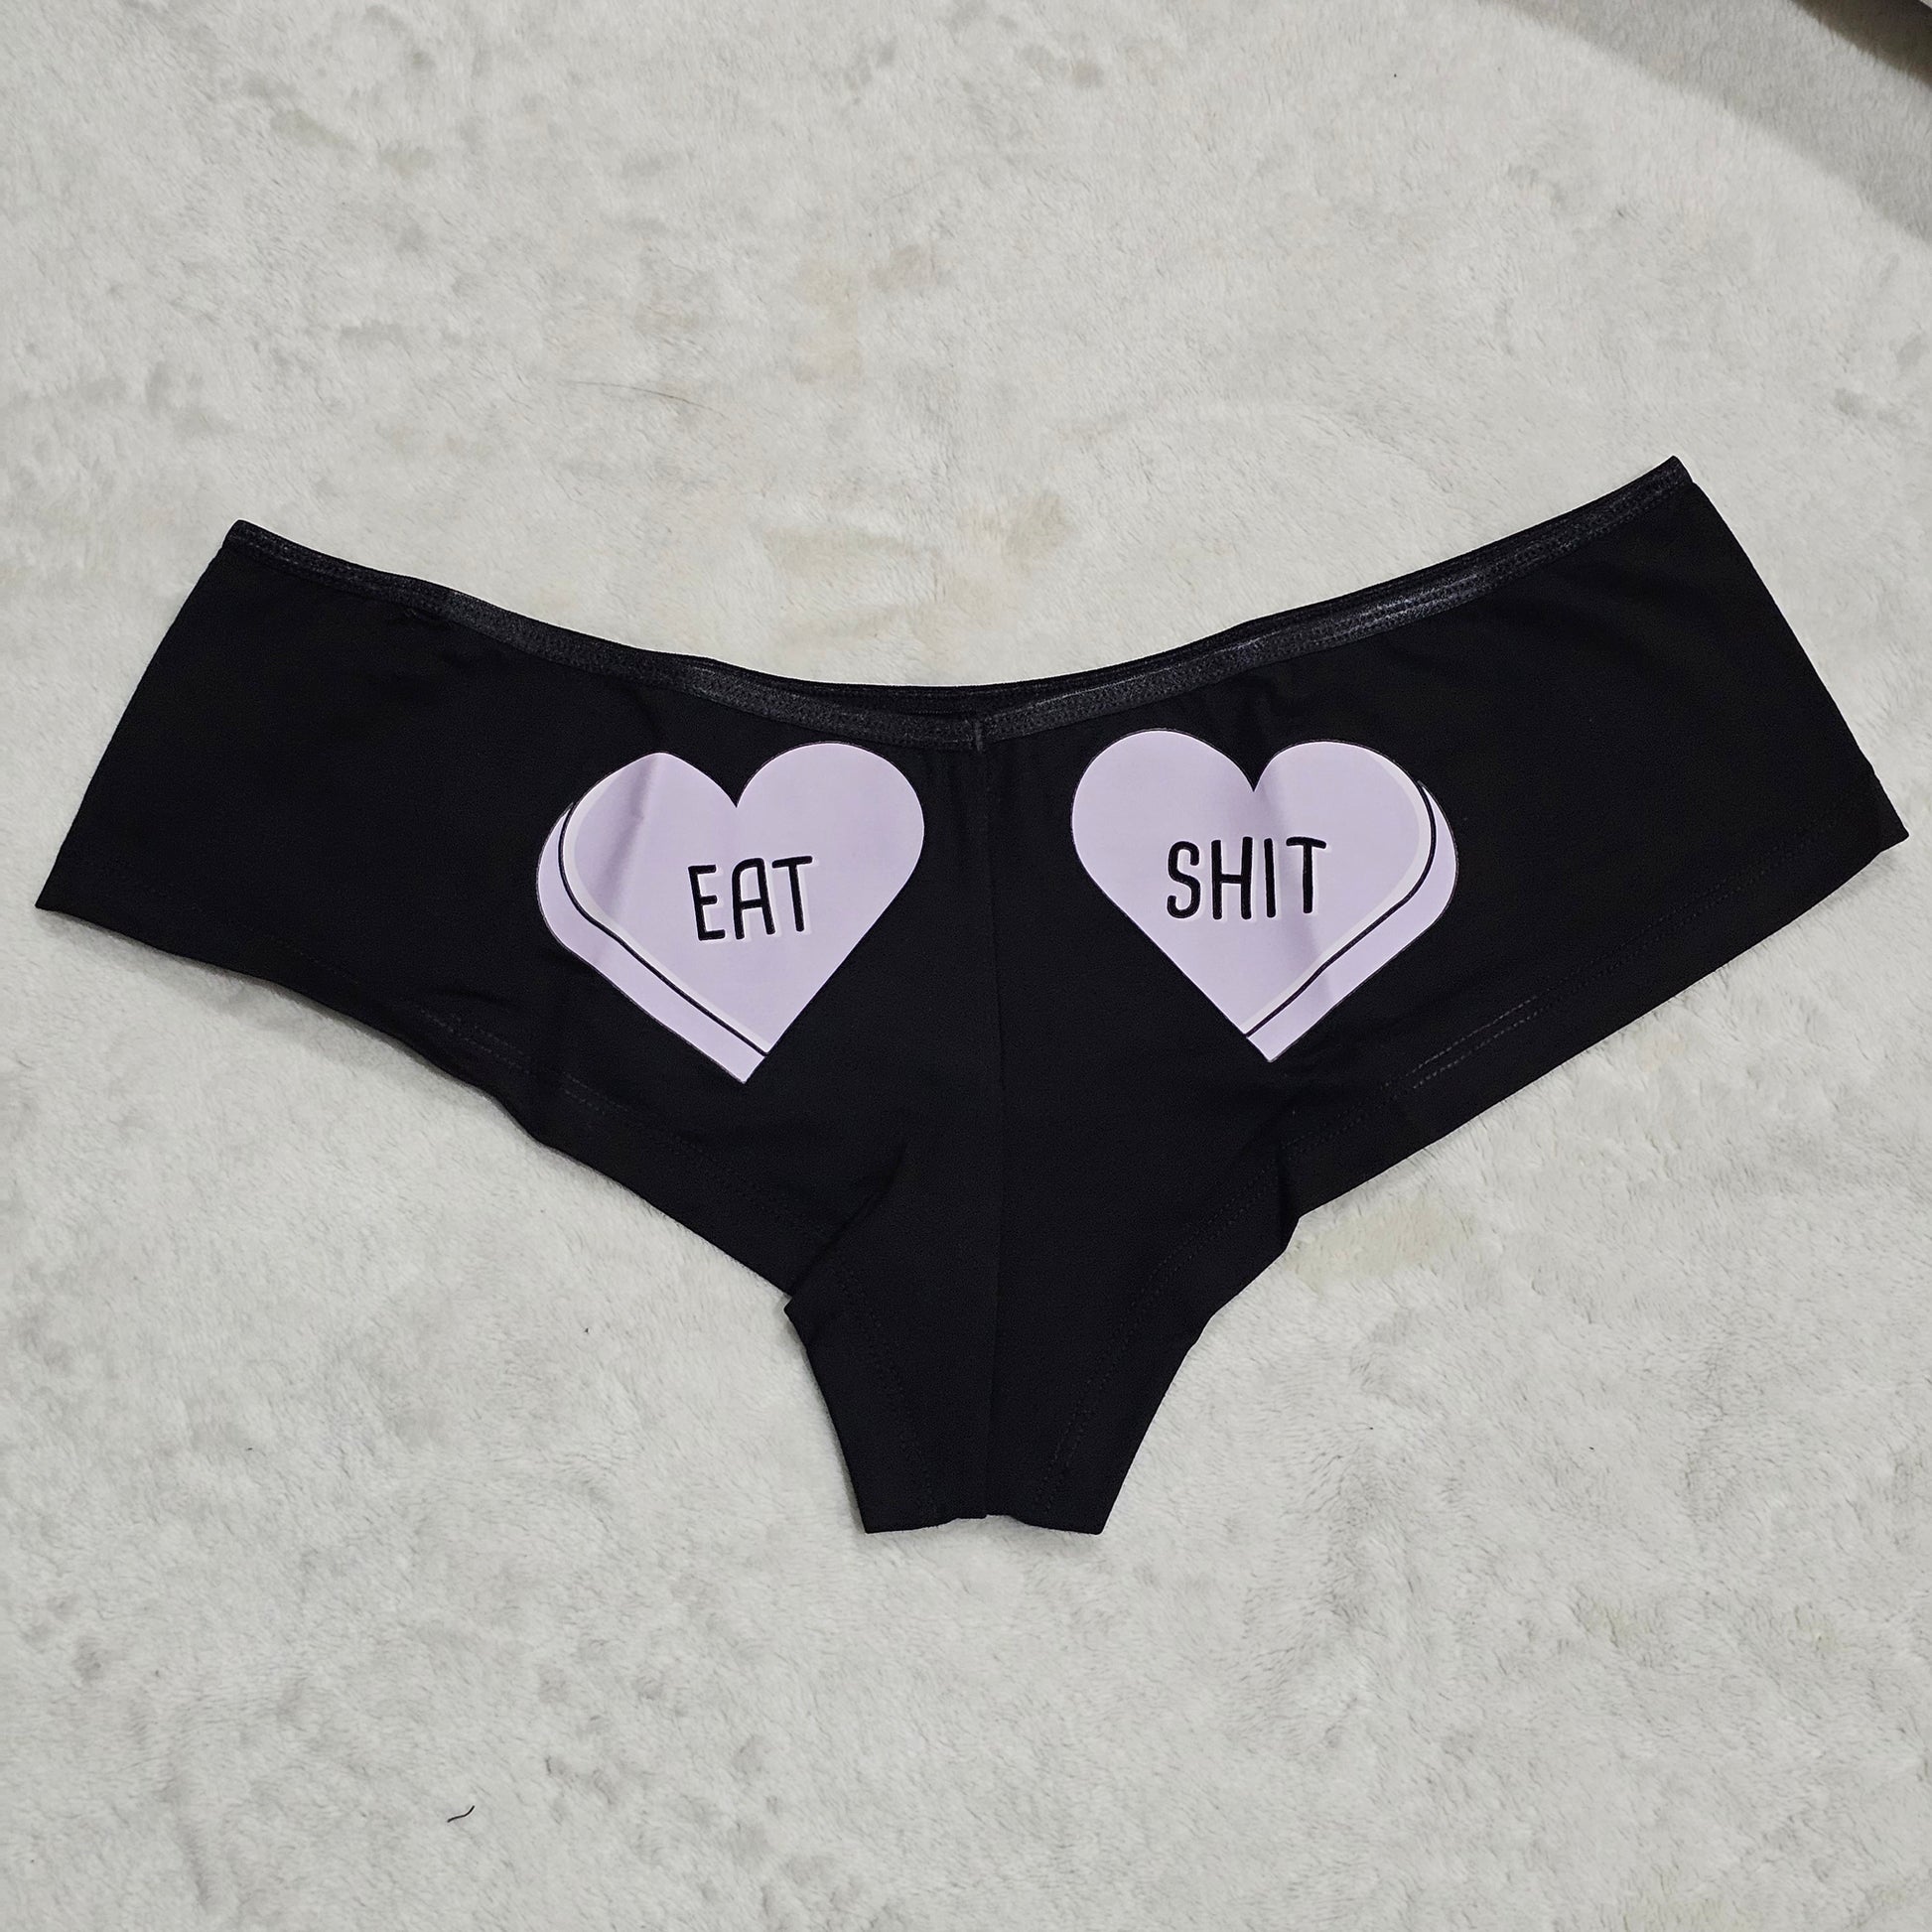 Eat Shit Boy Short Style | Black With Purple Hearts Graphic - Femfetti - Panties